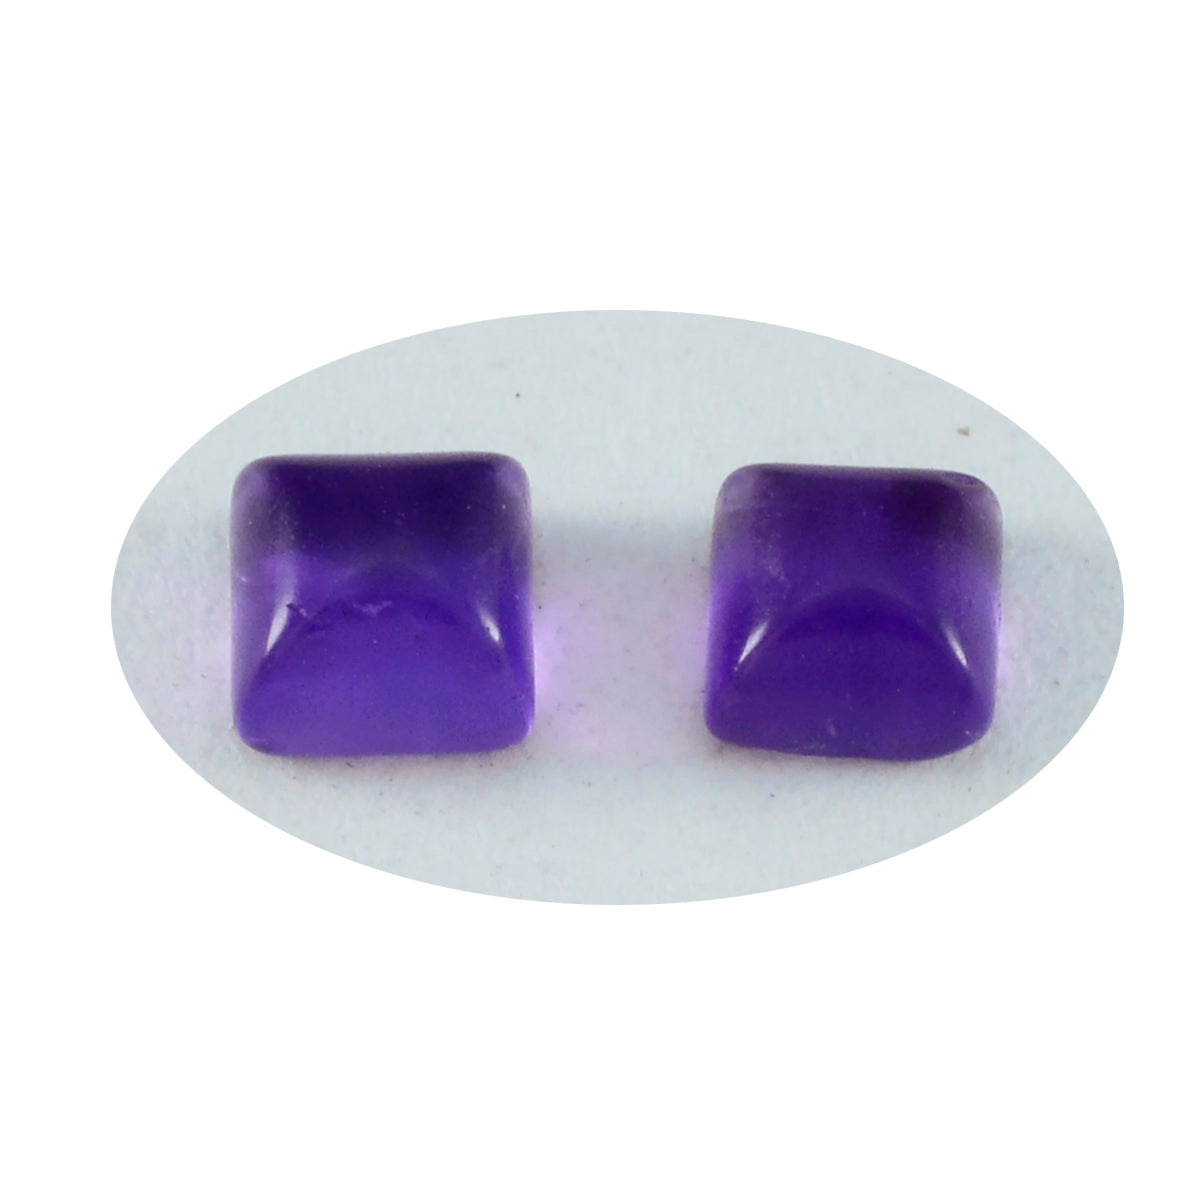 Riyogems 1PC Purple Amethyst Cabochon 7x7 mm Square Shape attractive Quality Stone